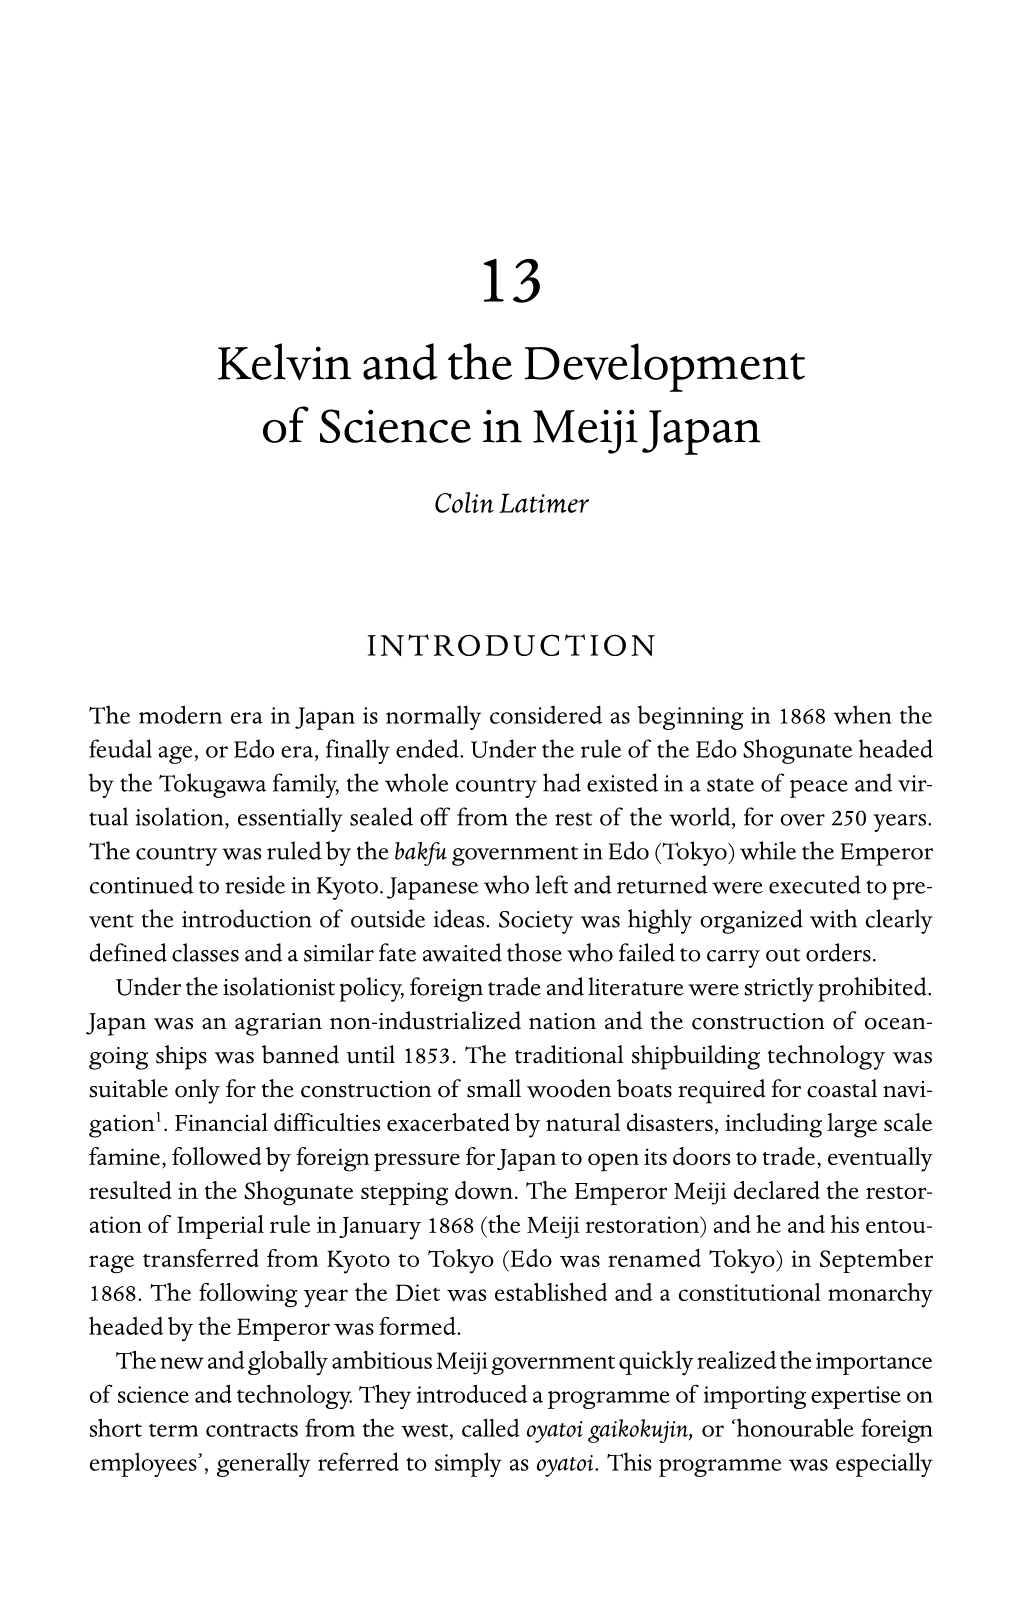 Kelvin and the Development of Science in Meiji Japan